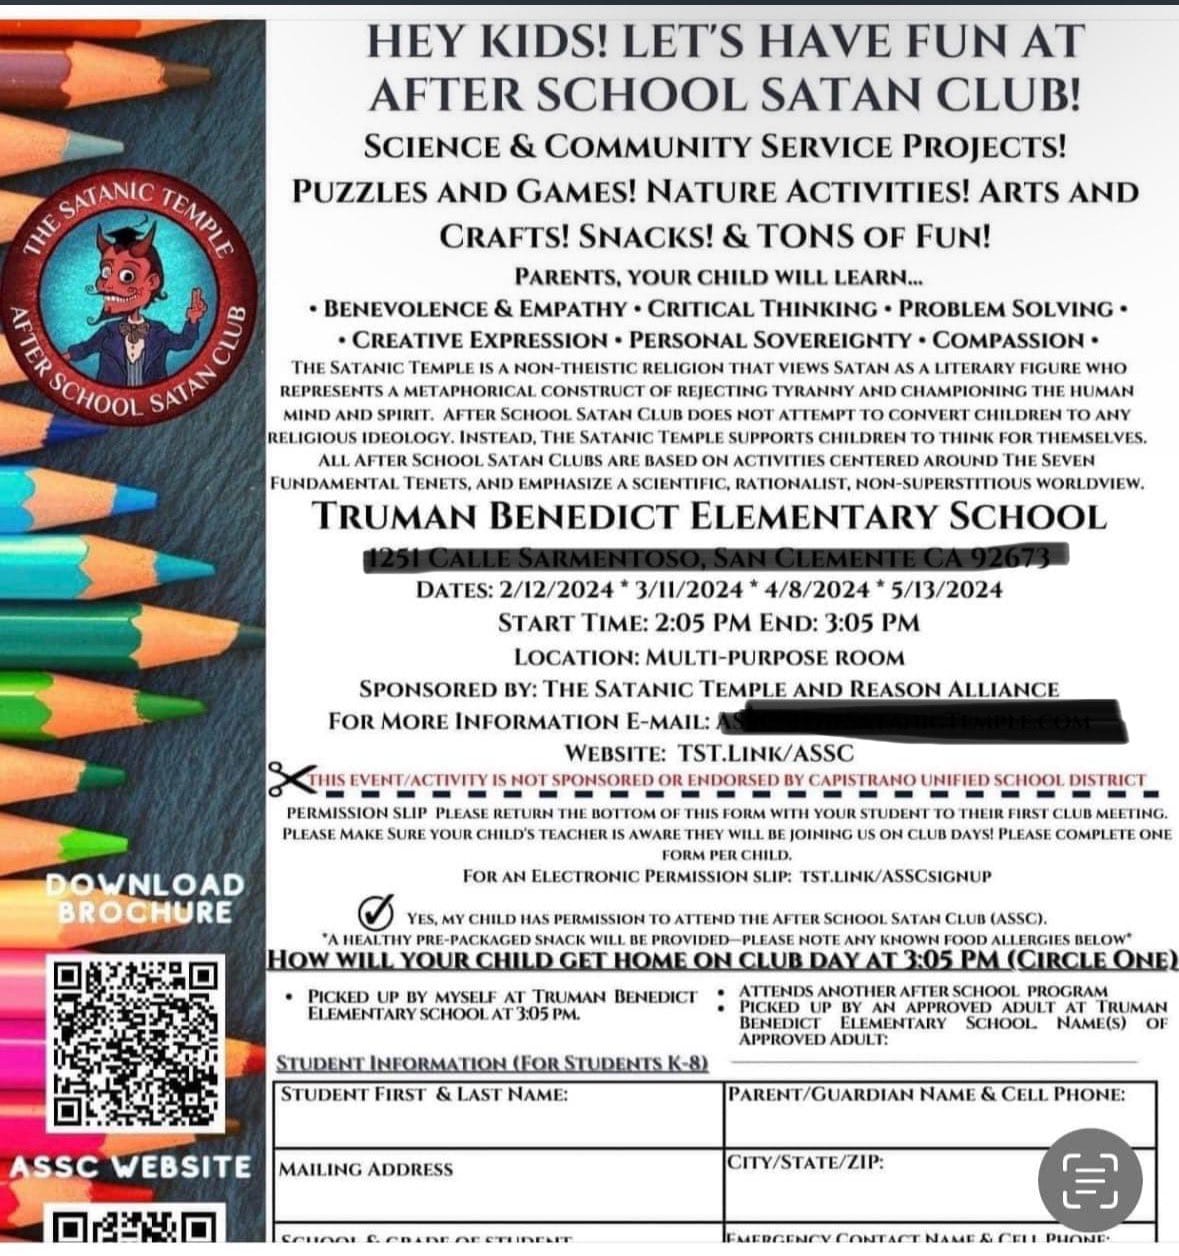 ‘After School Satan Club’ launching at O.C. school